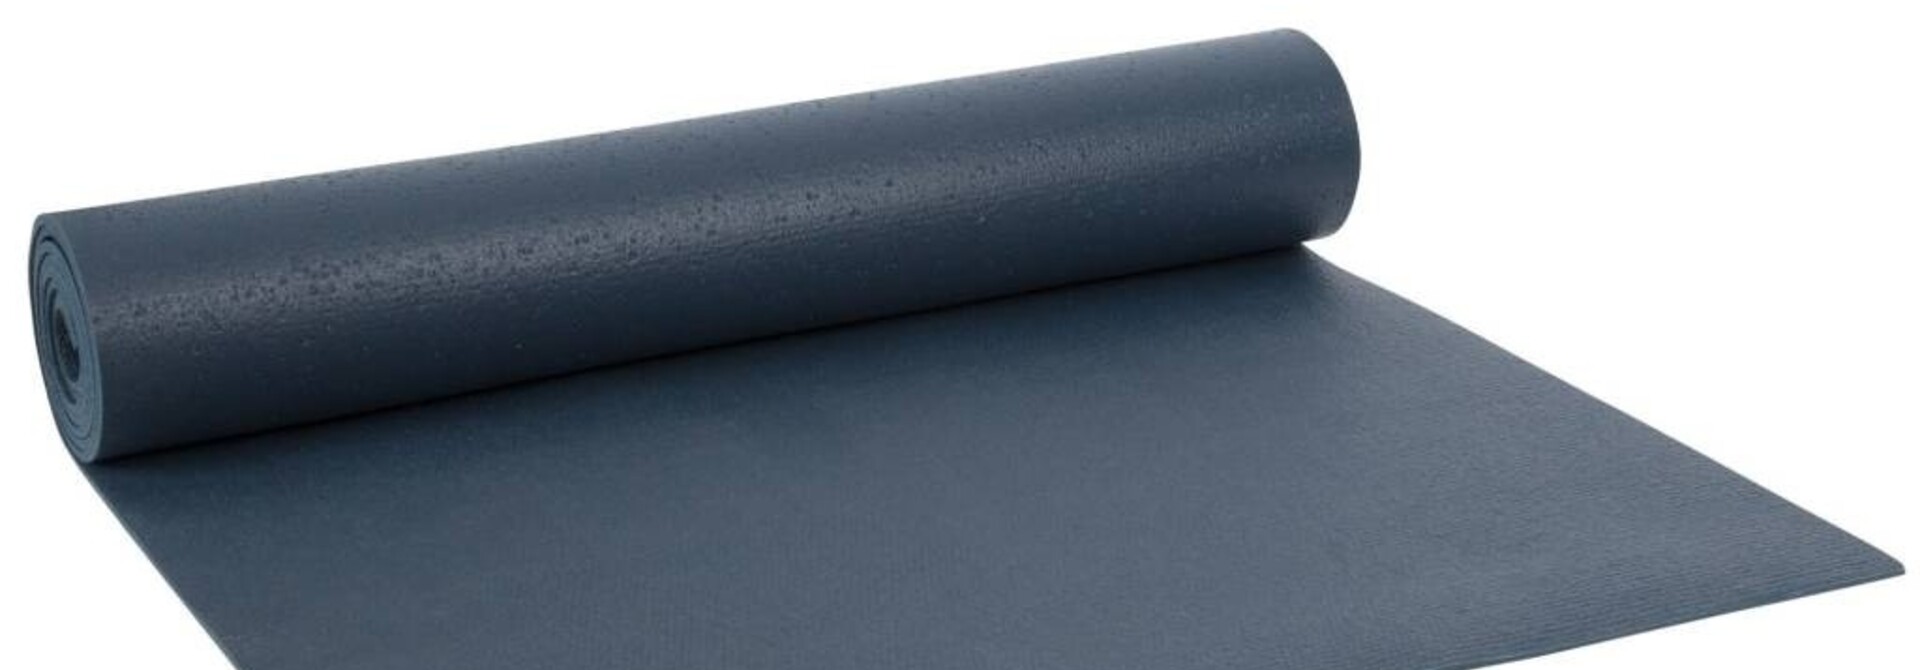 Yogisha Studio Yoga Mat Extra Wide XL - Dark Blue